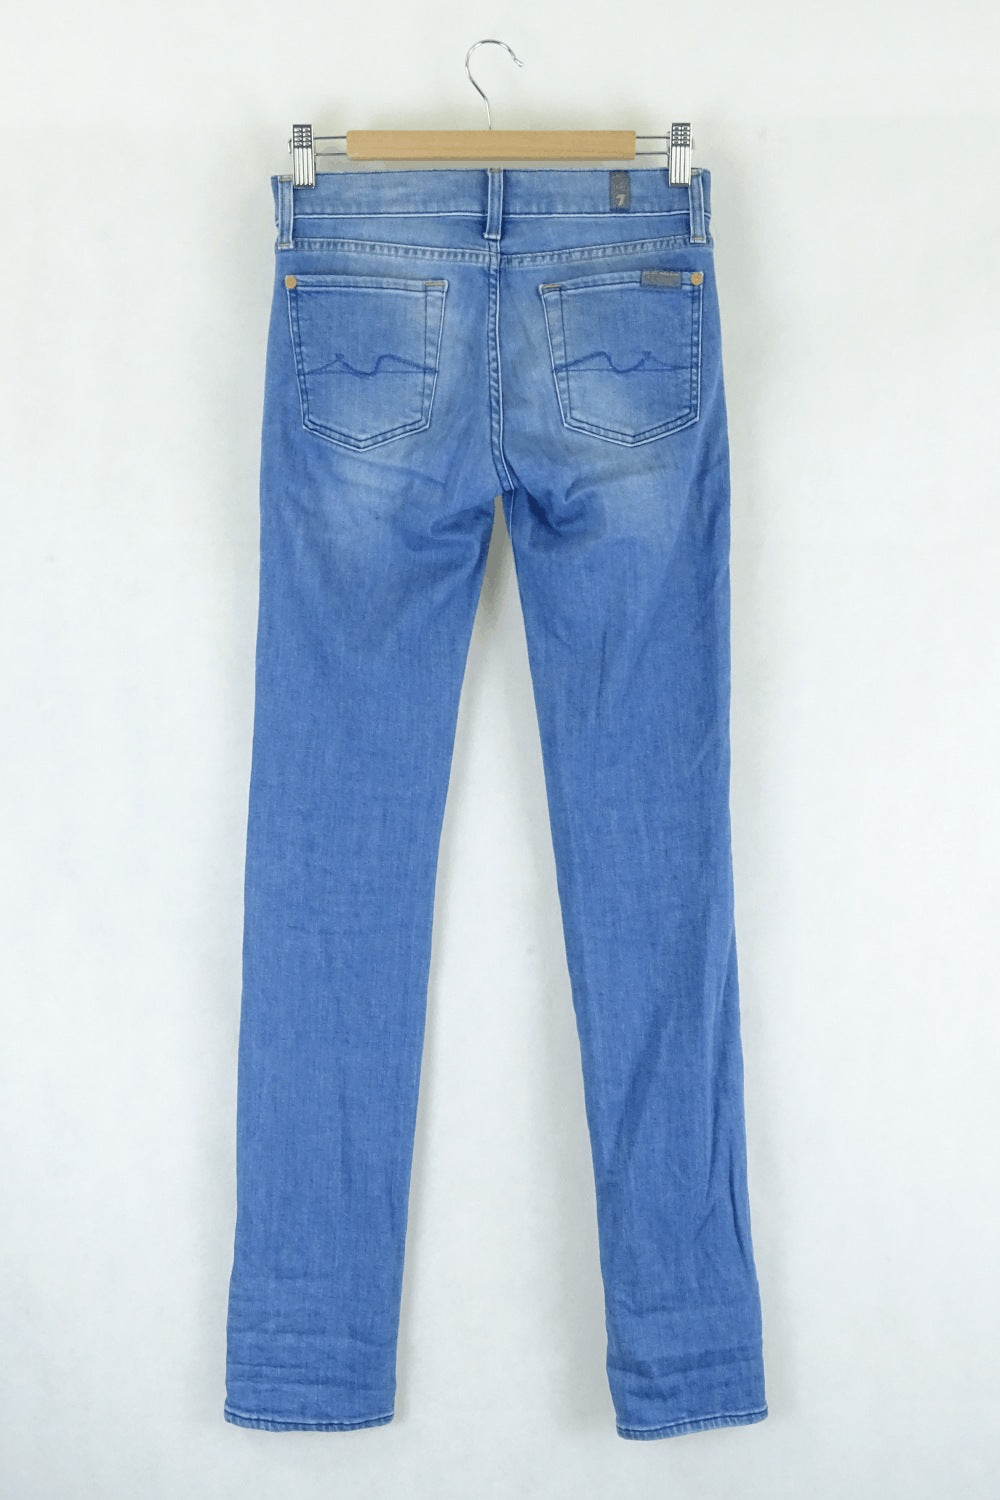 7 For All Mankind Blue Denim Skinny Jeans 25